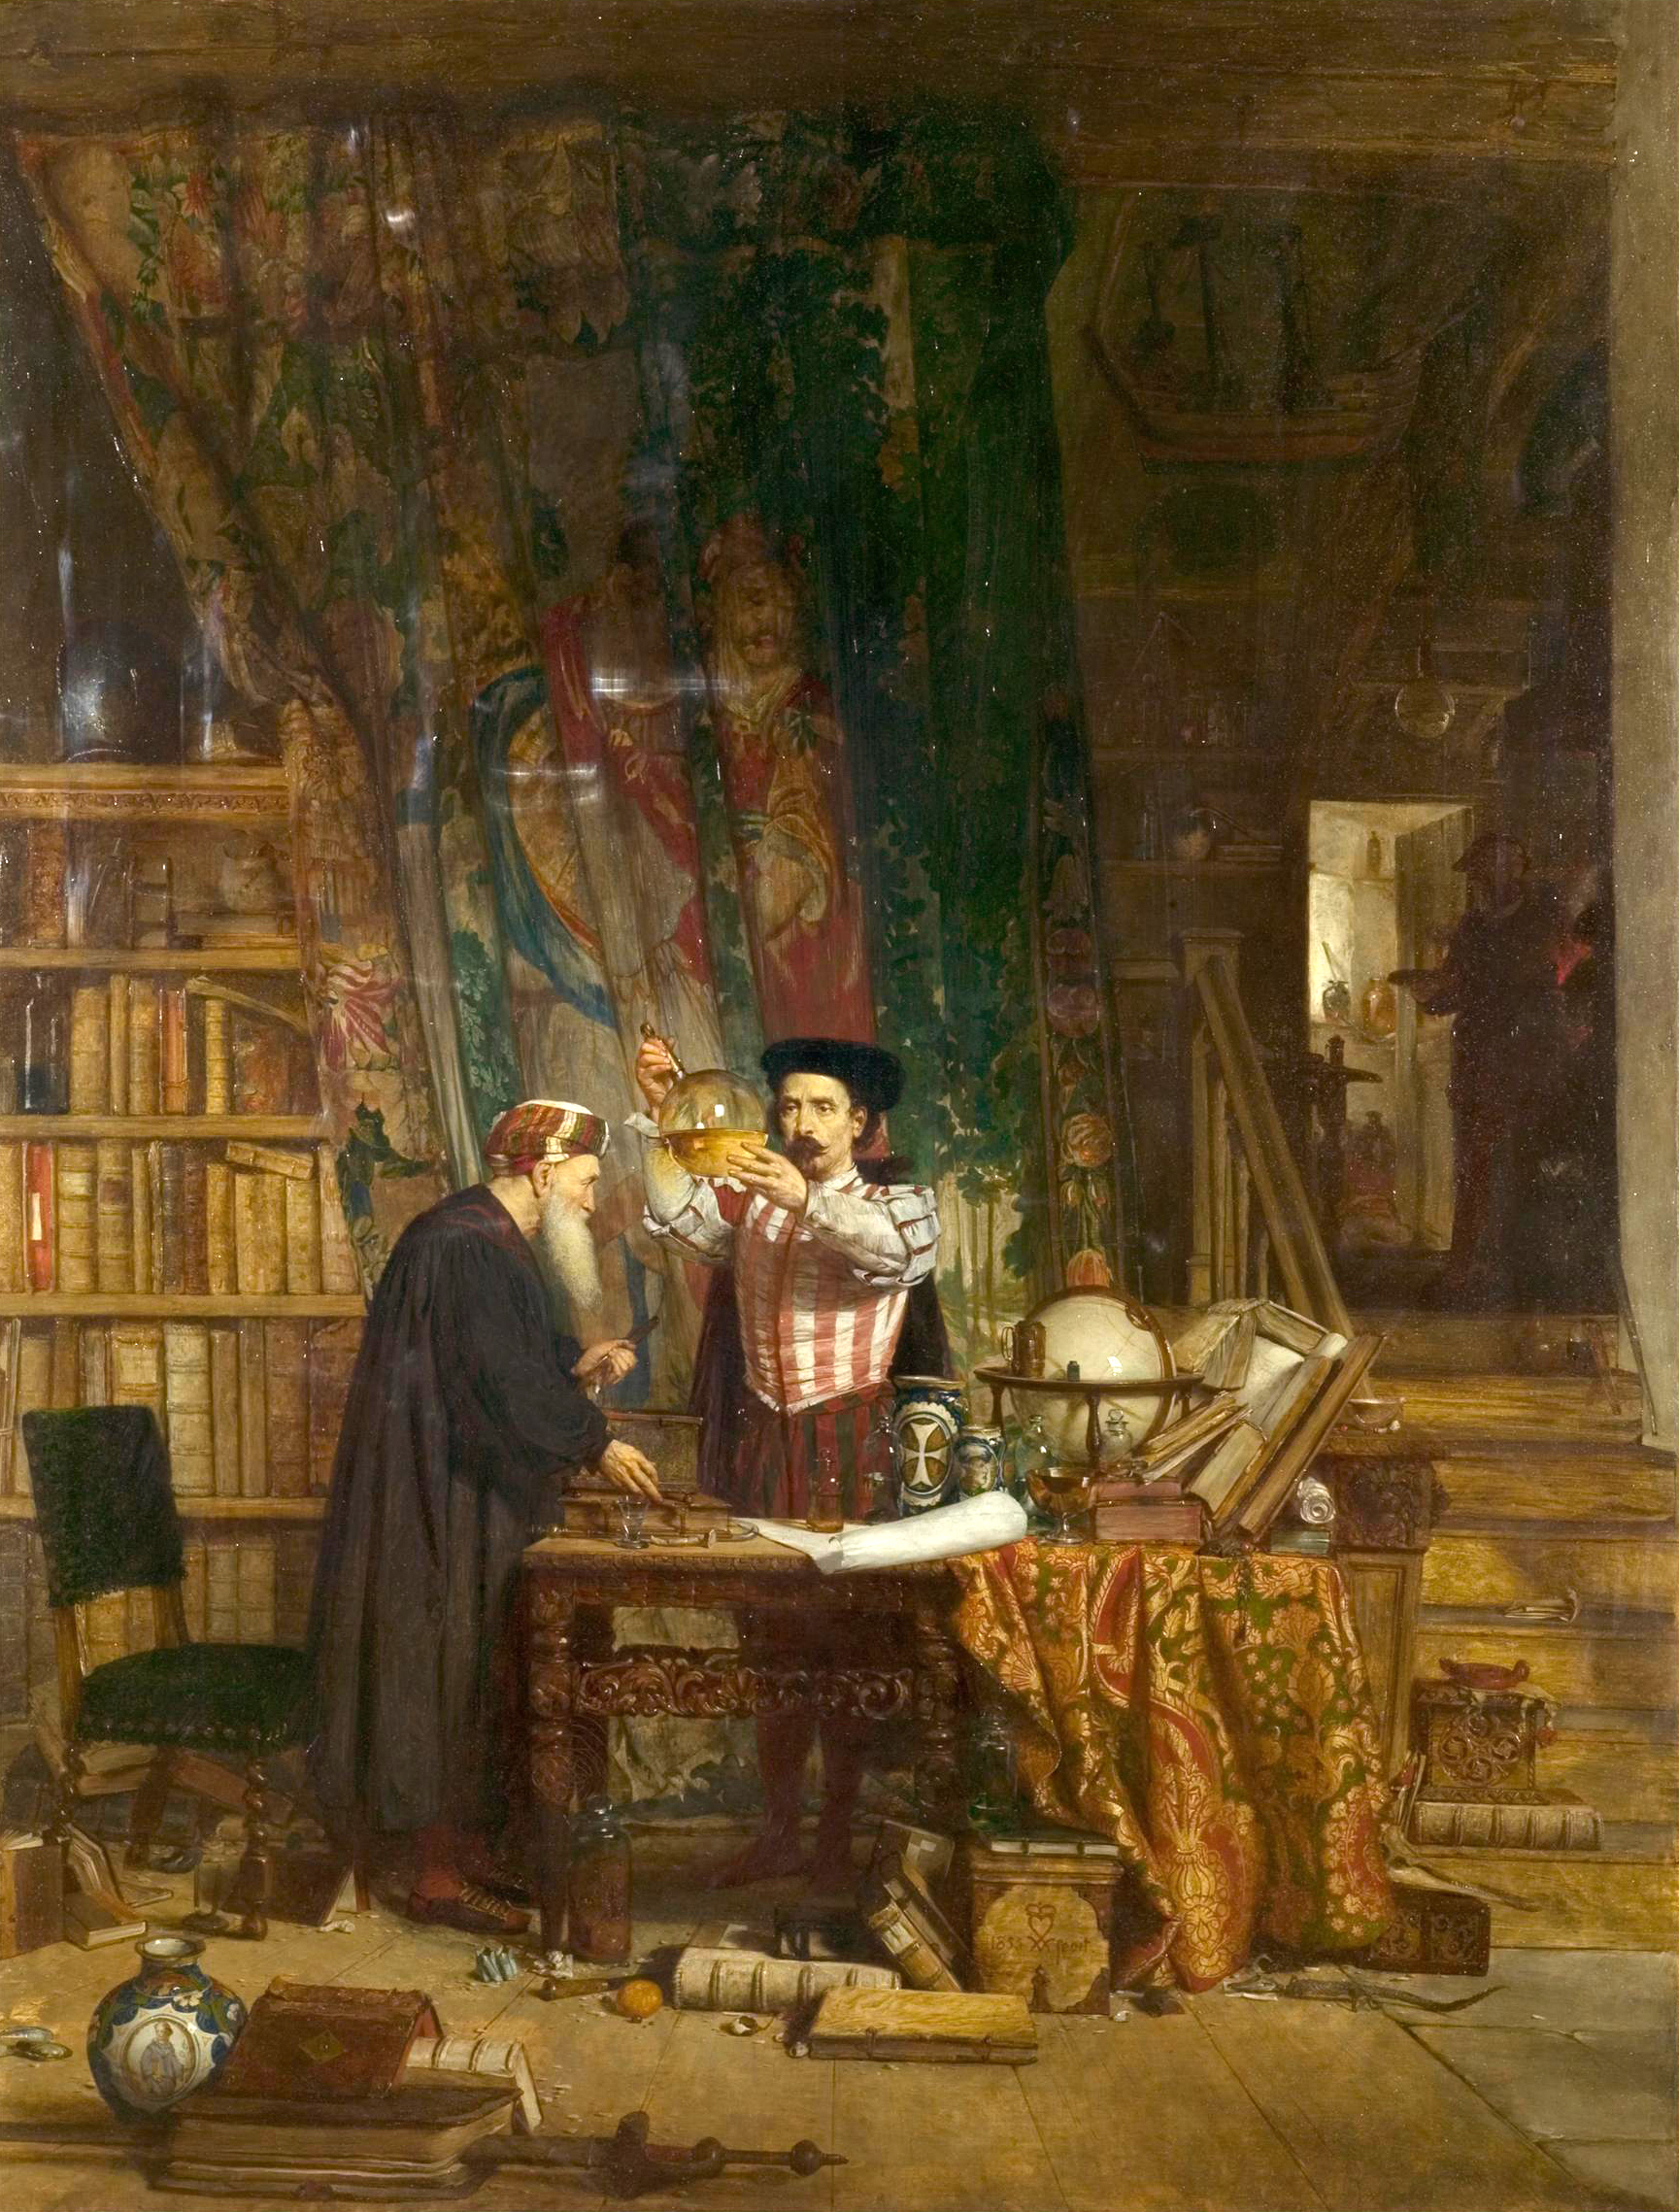 The Alchemist by William Fettes Douglas (Wikimedia Commons)